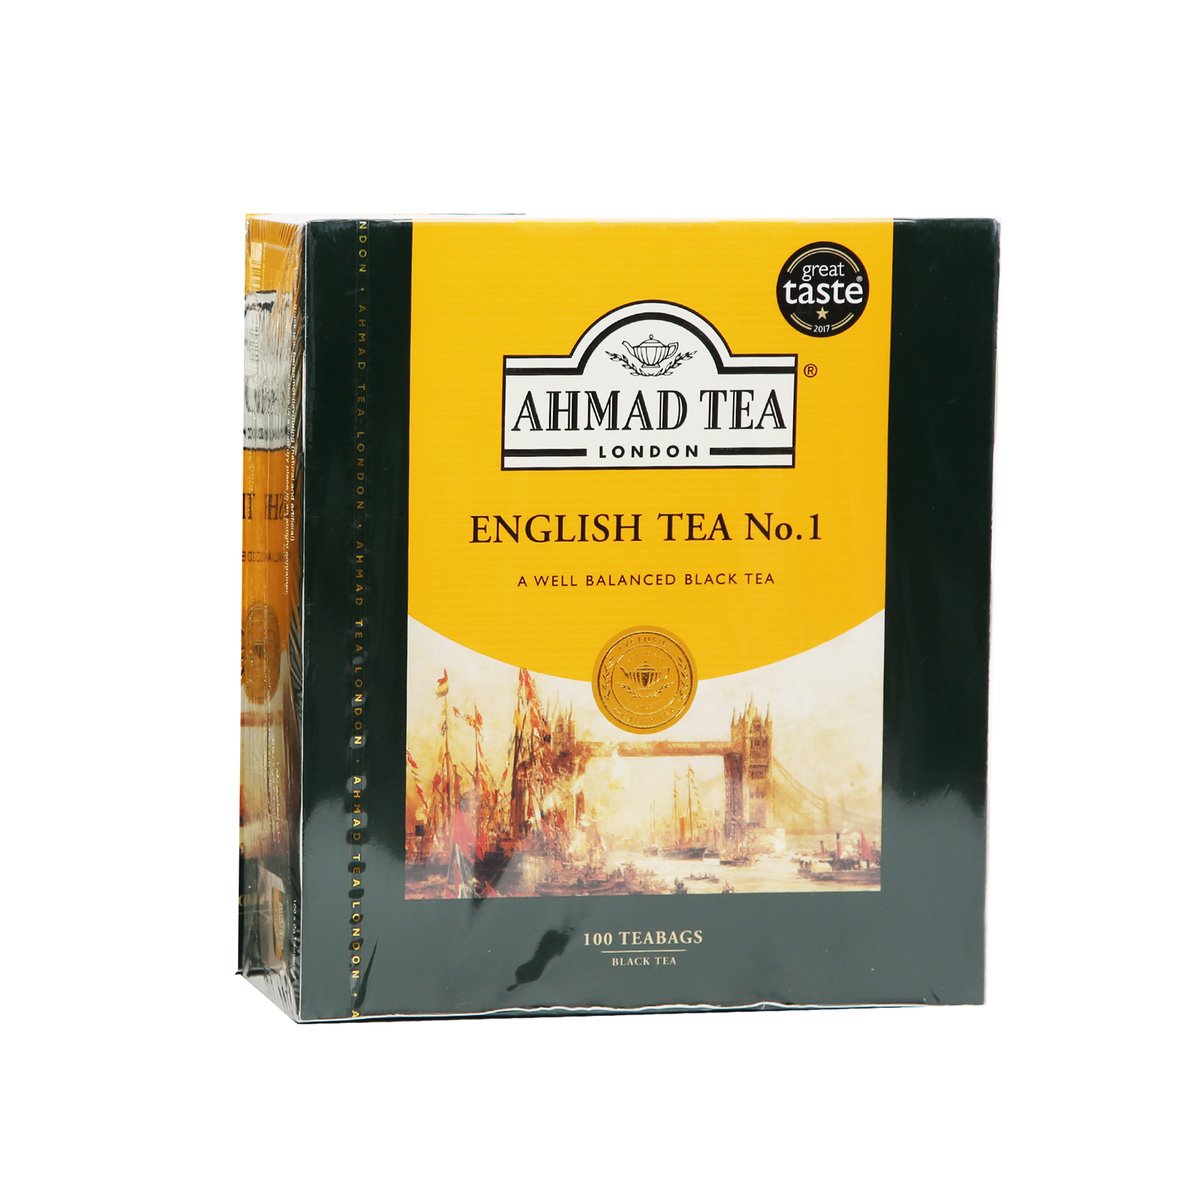 Ahmad English Tea 2 x 100pcs